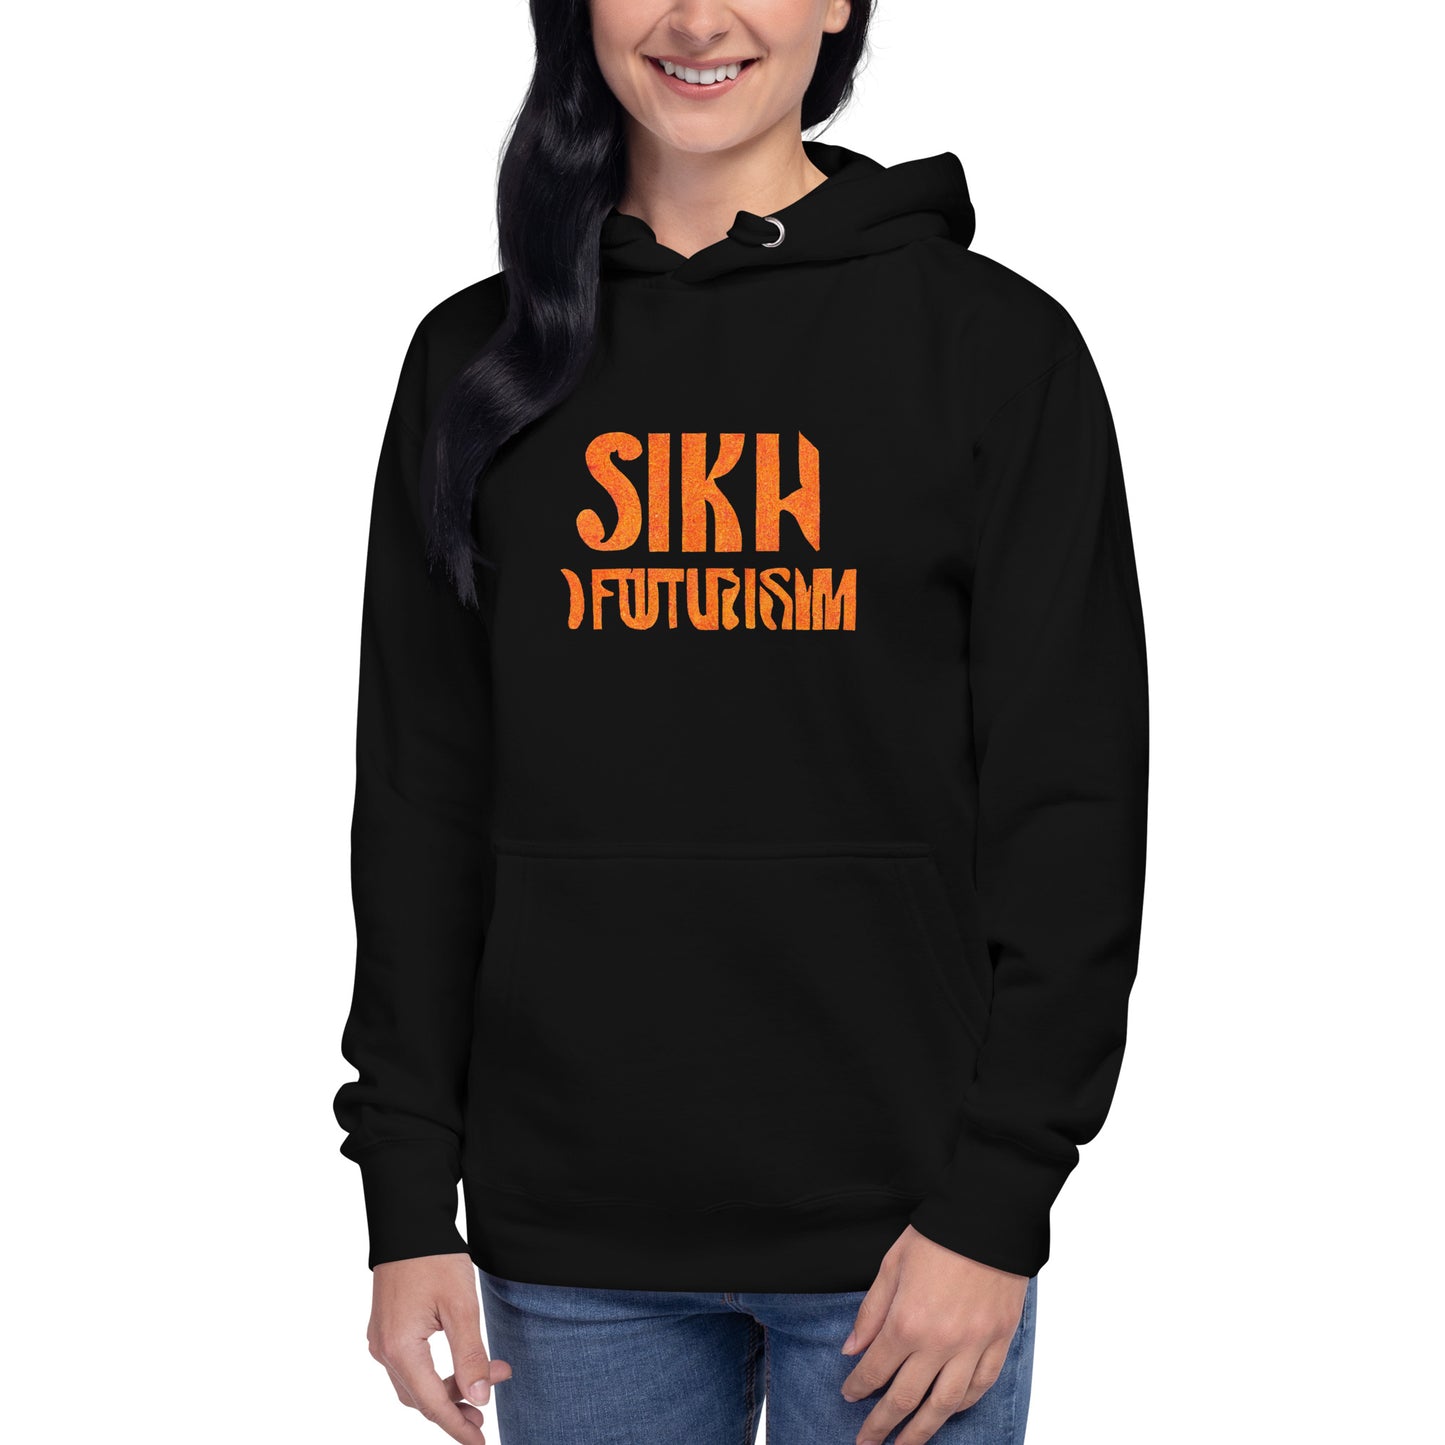 Sikh Futurism Hoodie - Unisex Men's and Women's